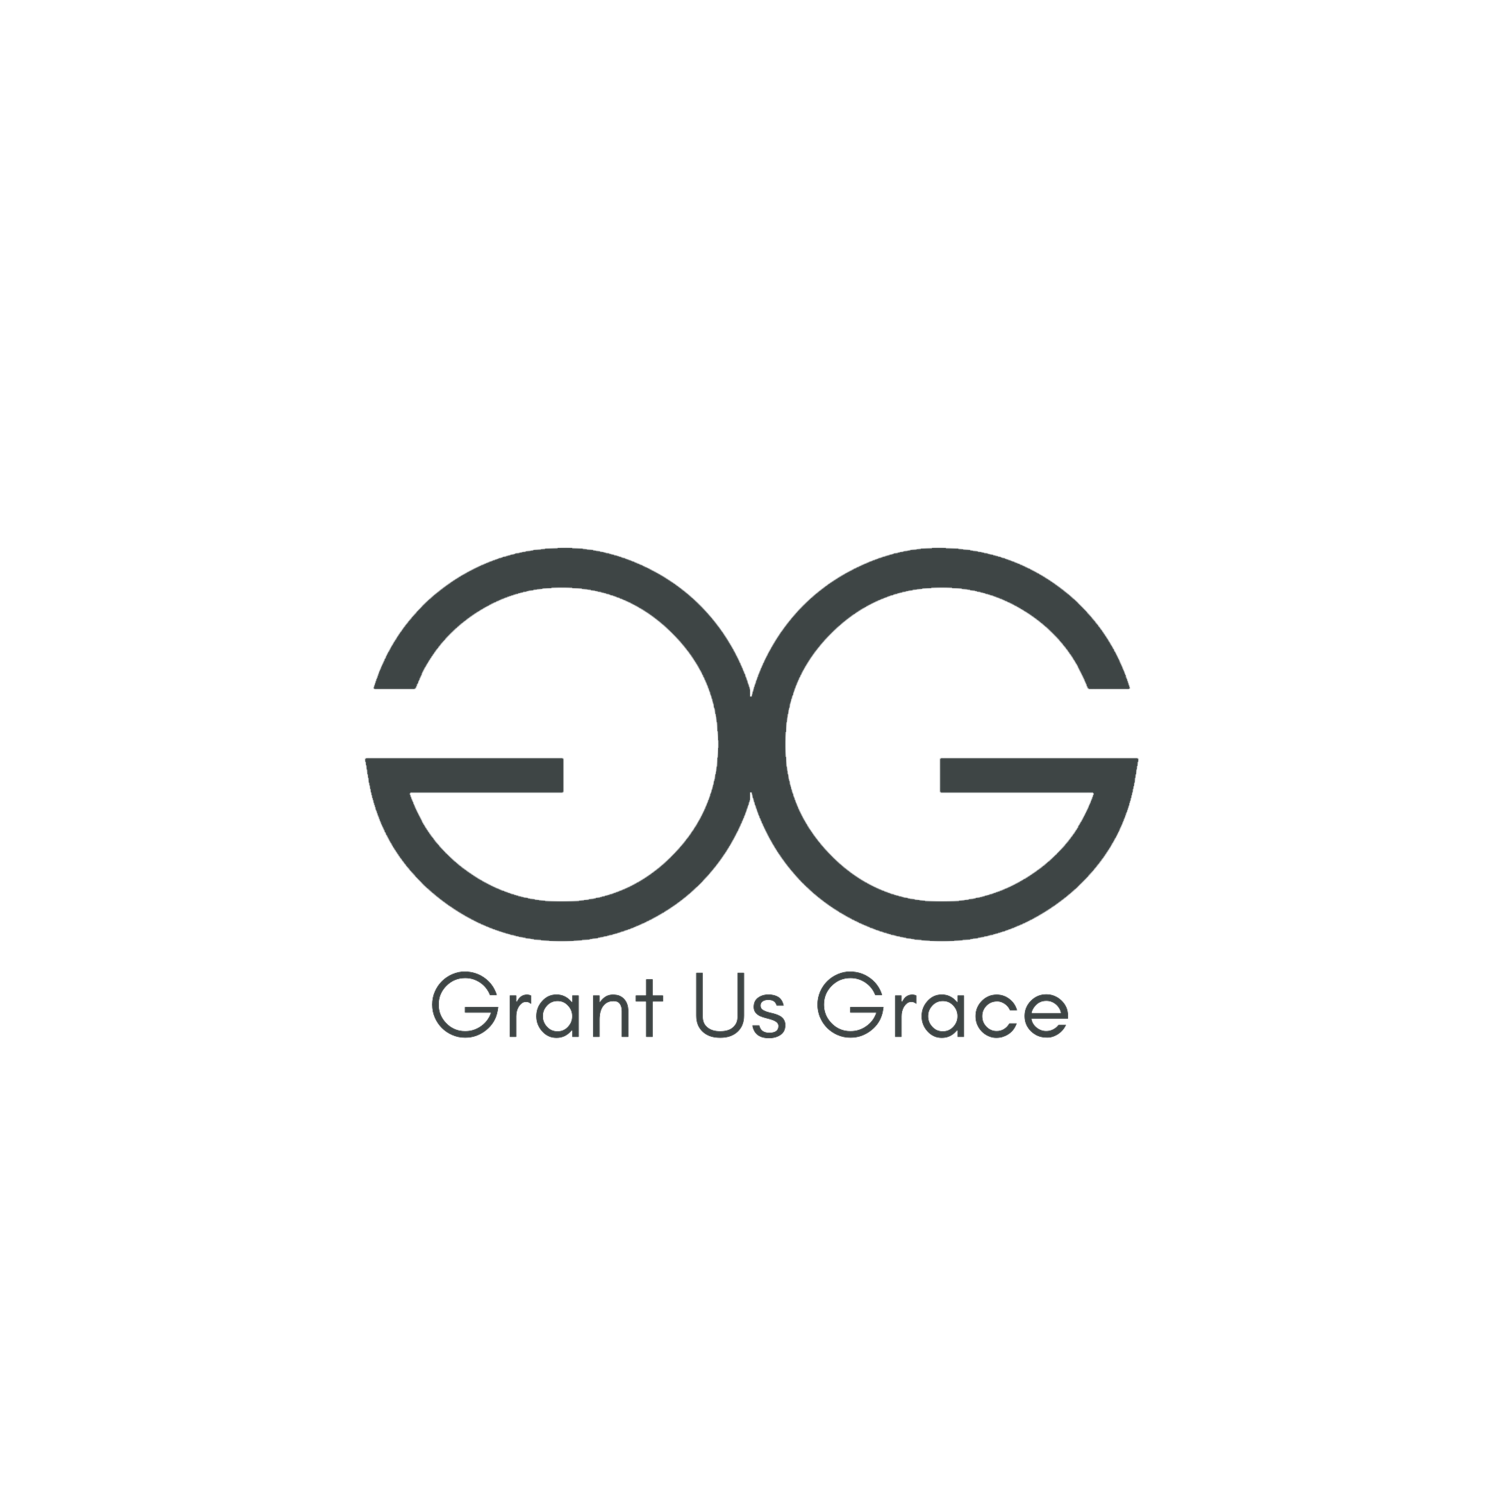 Grant Us Grace